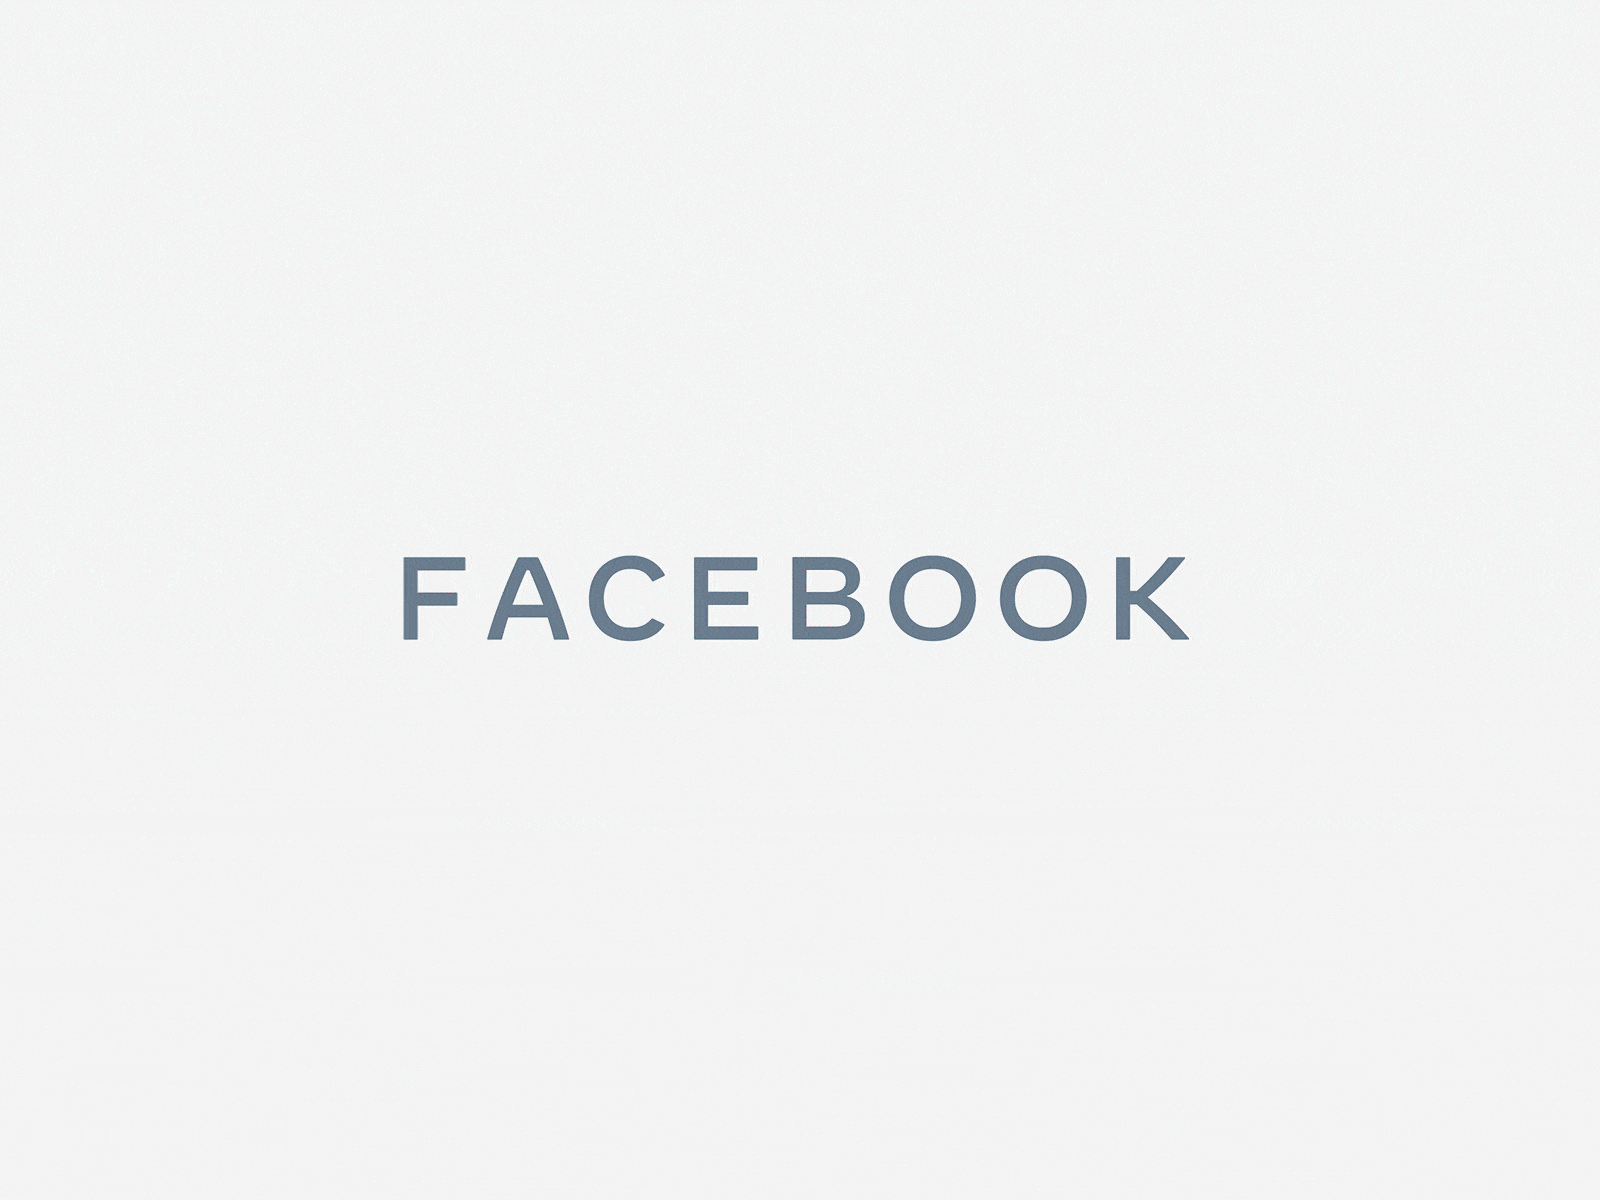 Facebook rebrand dating facebook fock logo rebrand